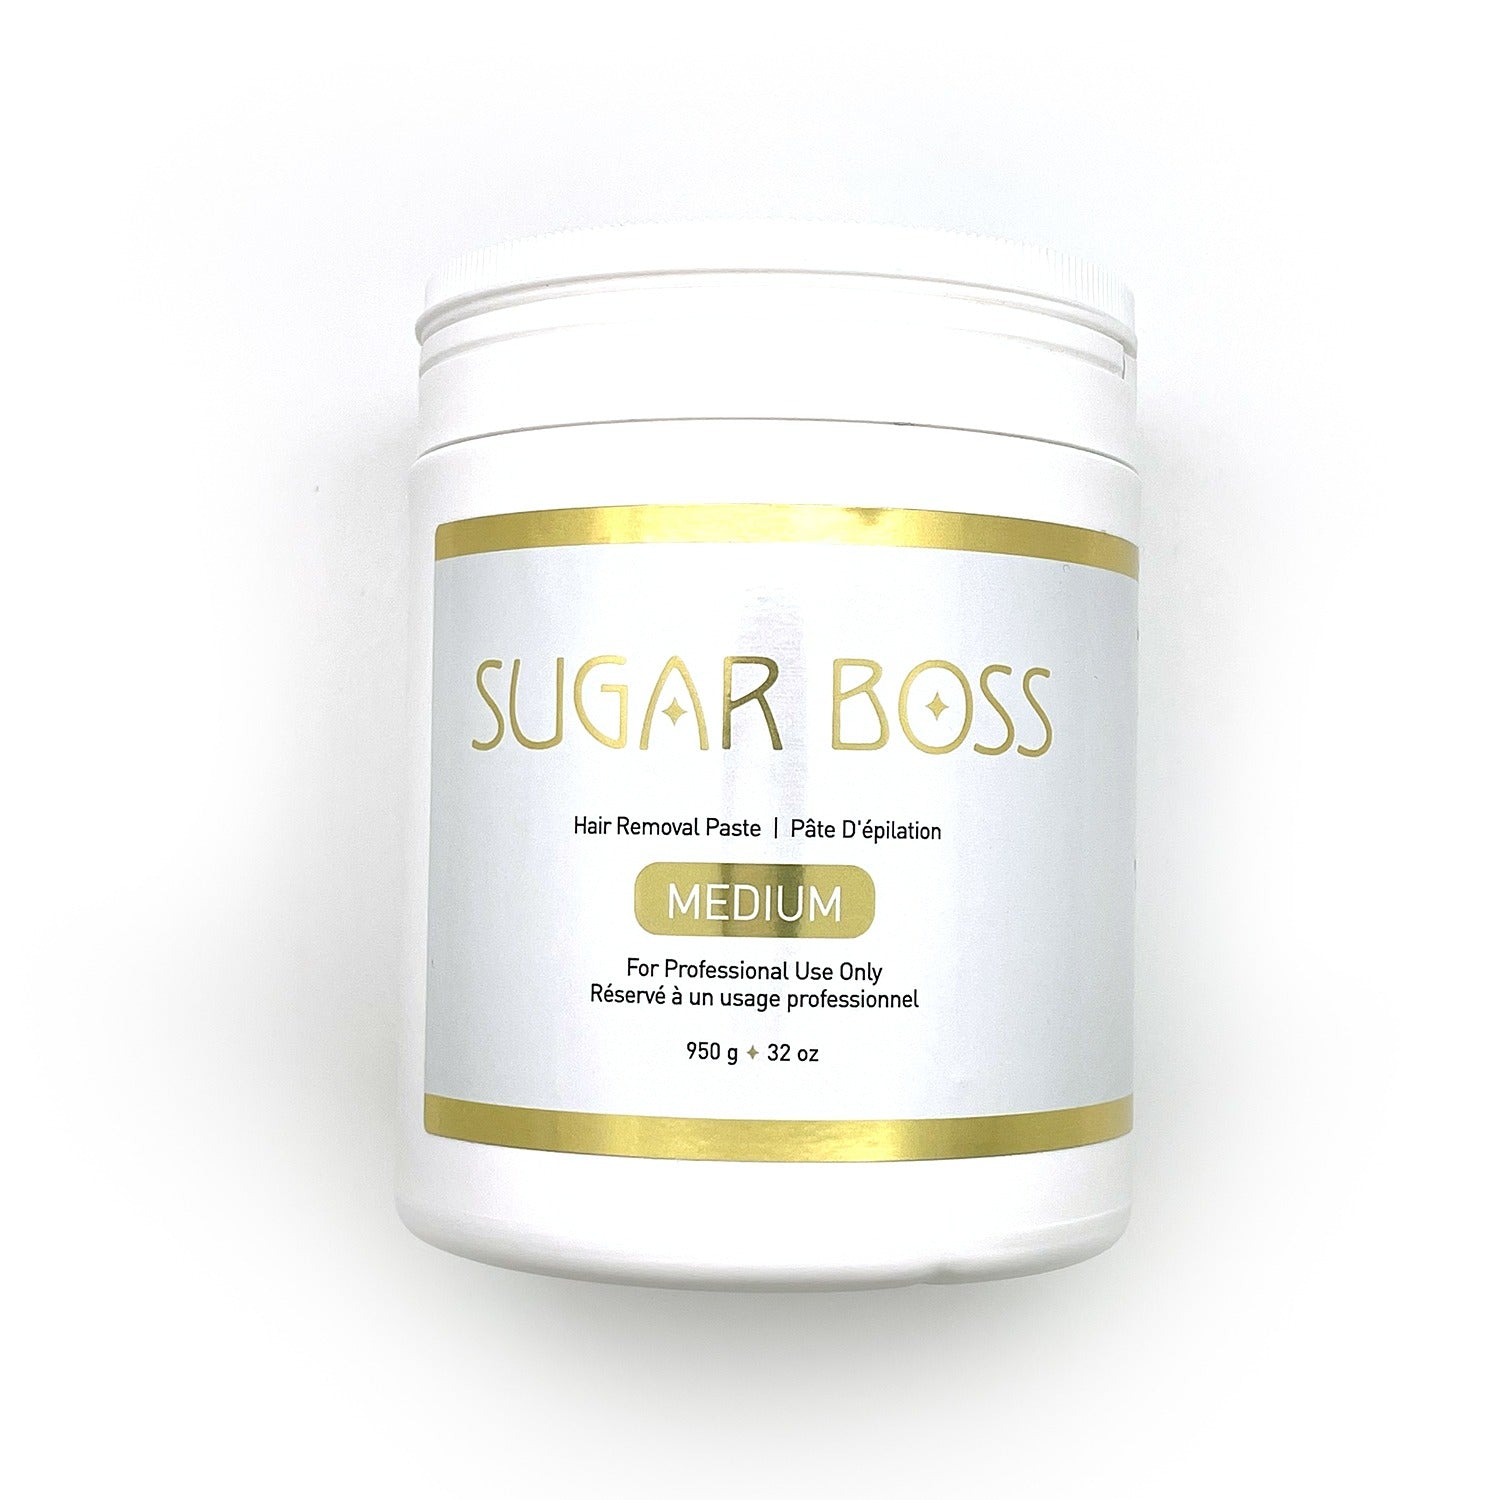 Sugar Boss - Medium Sugar Paste - Creata Beauty - Professional Beauty Products